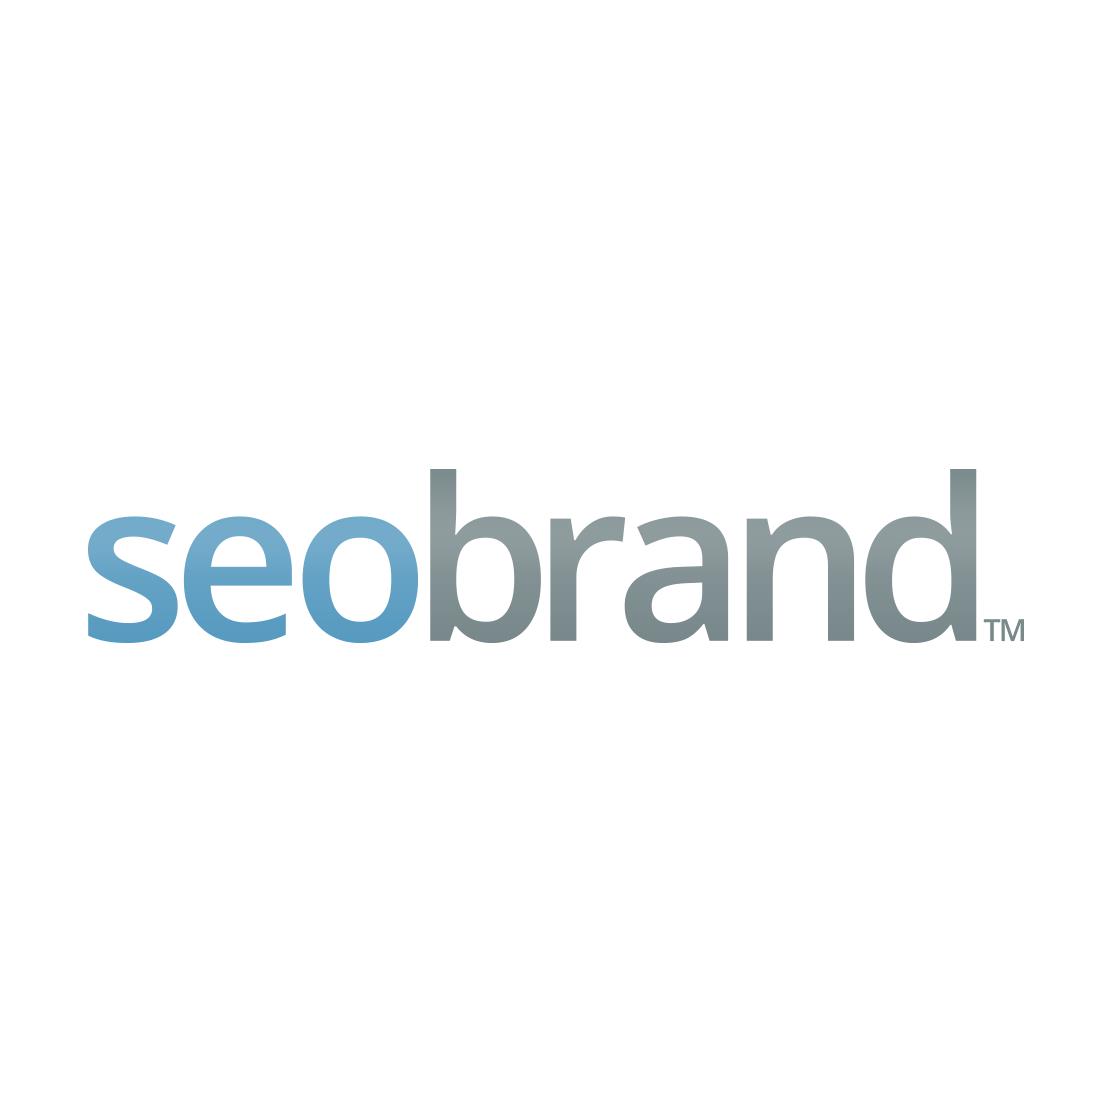 Best Real Estate SEO Firm Logo: SEO Brand